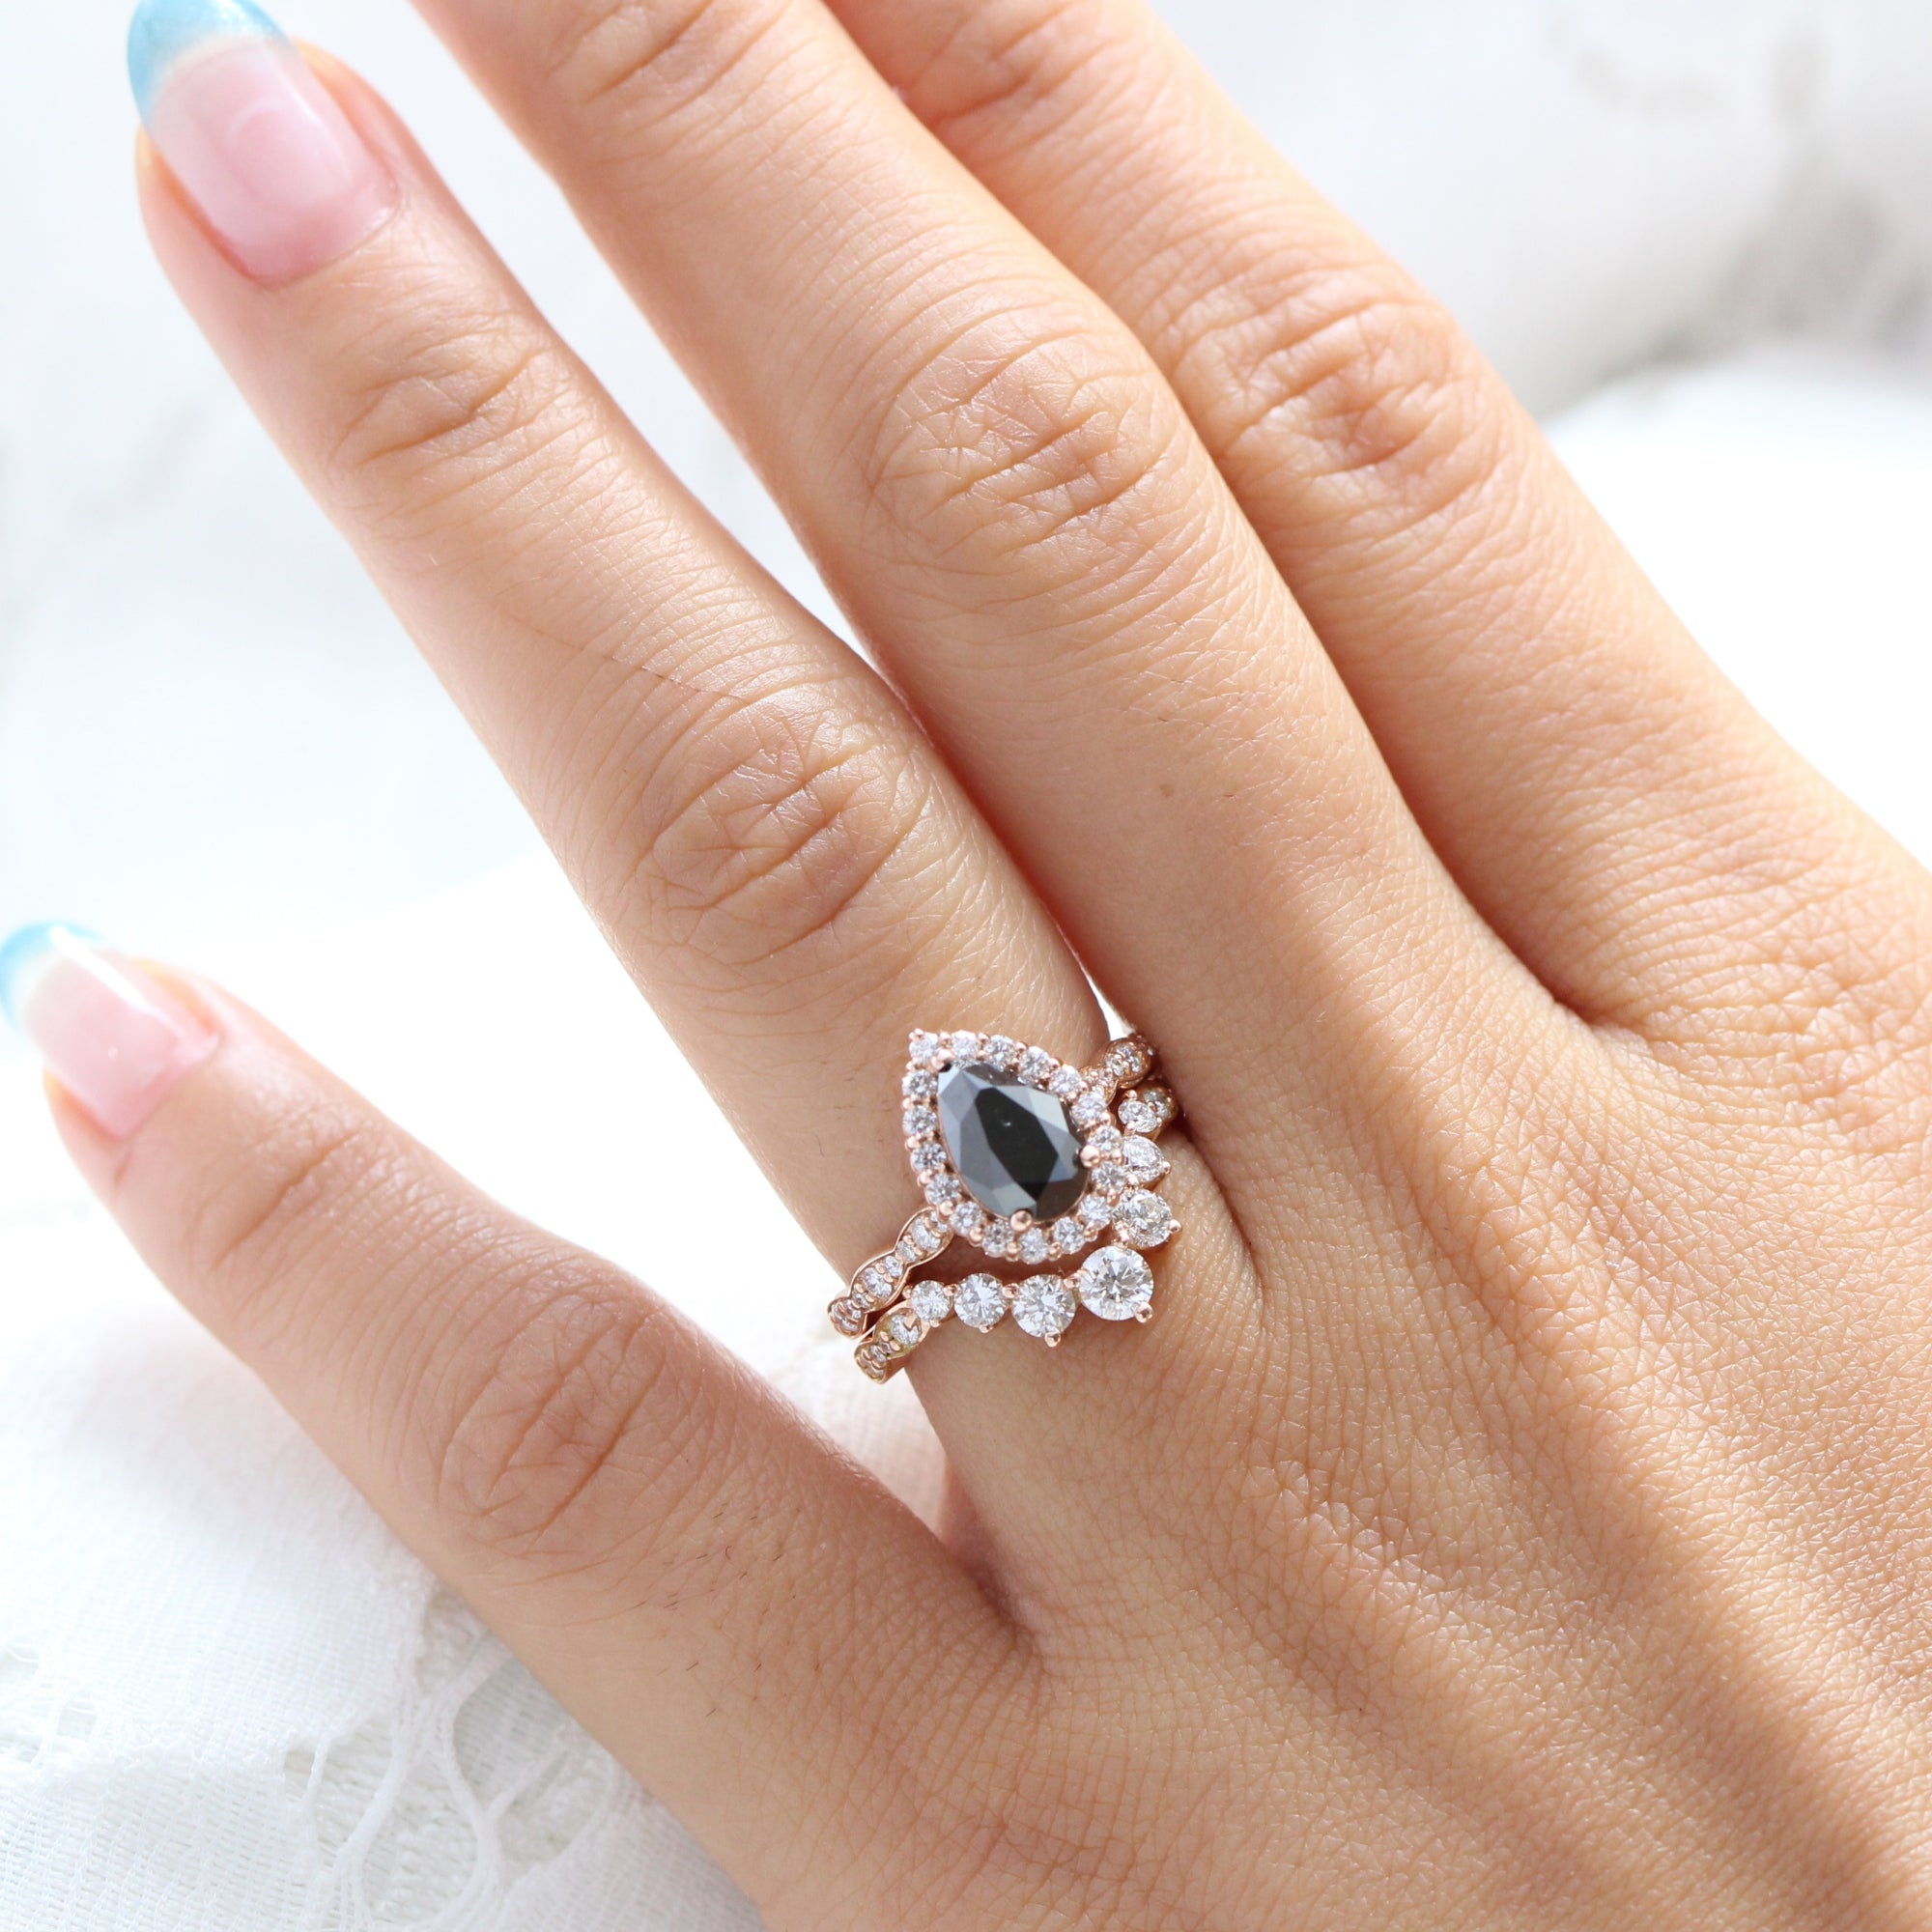 Pear black diamond engagement ring rose gold large diamond wedding band bridal ring set la more design jewelry